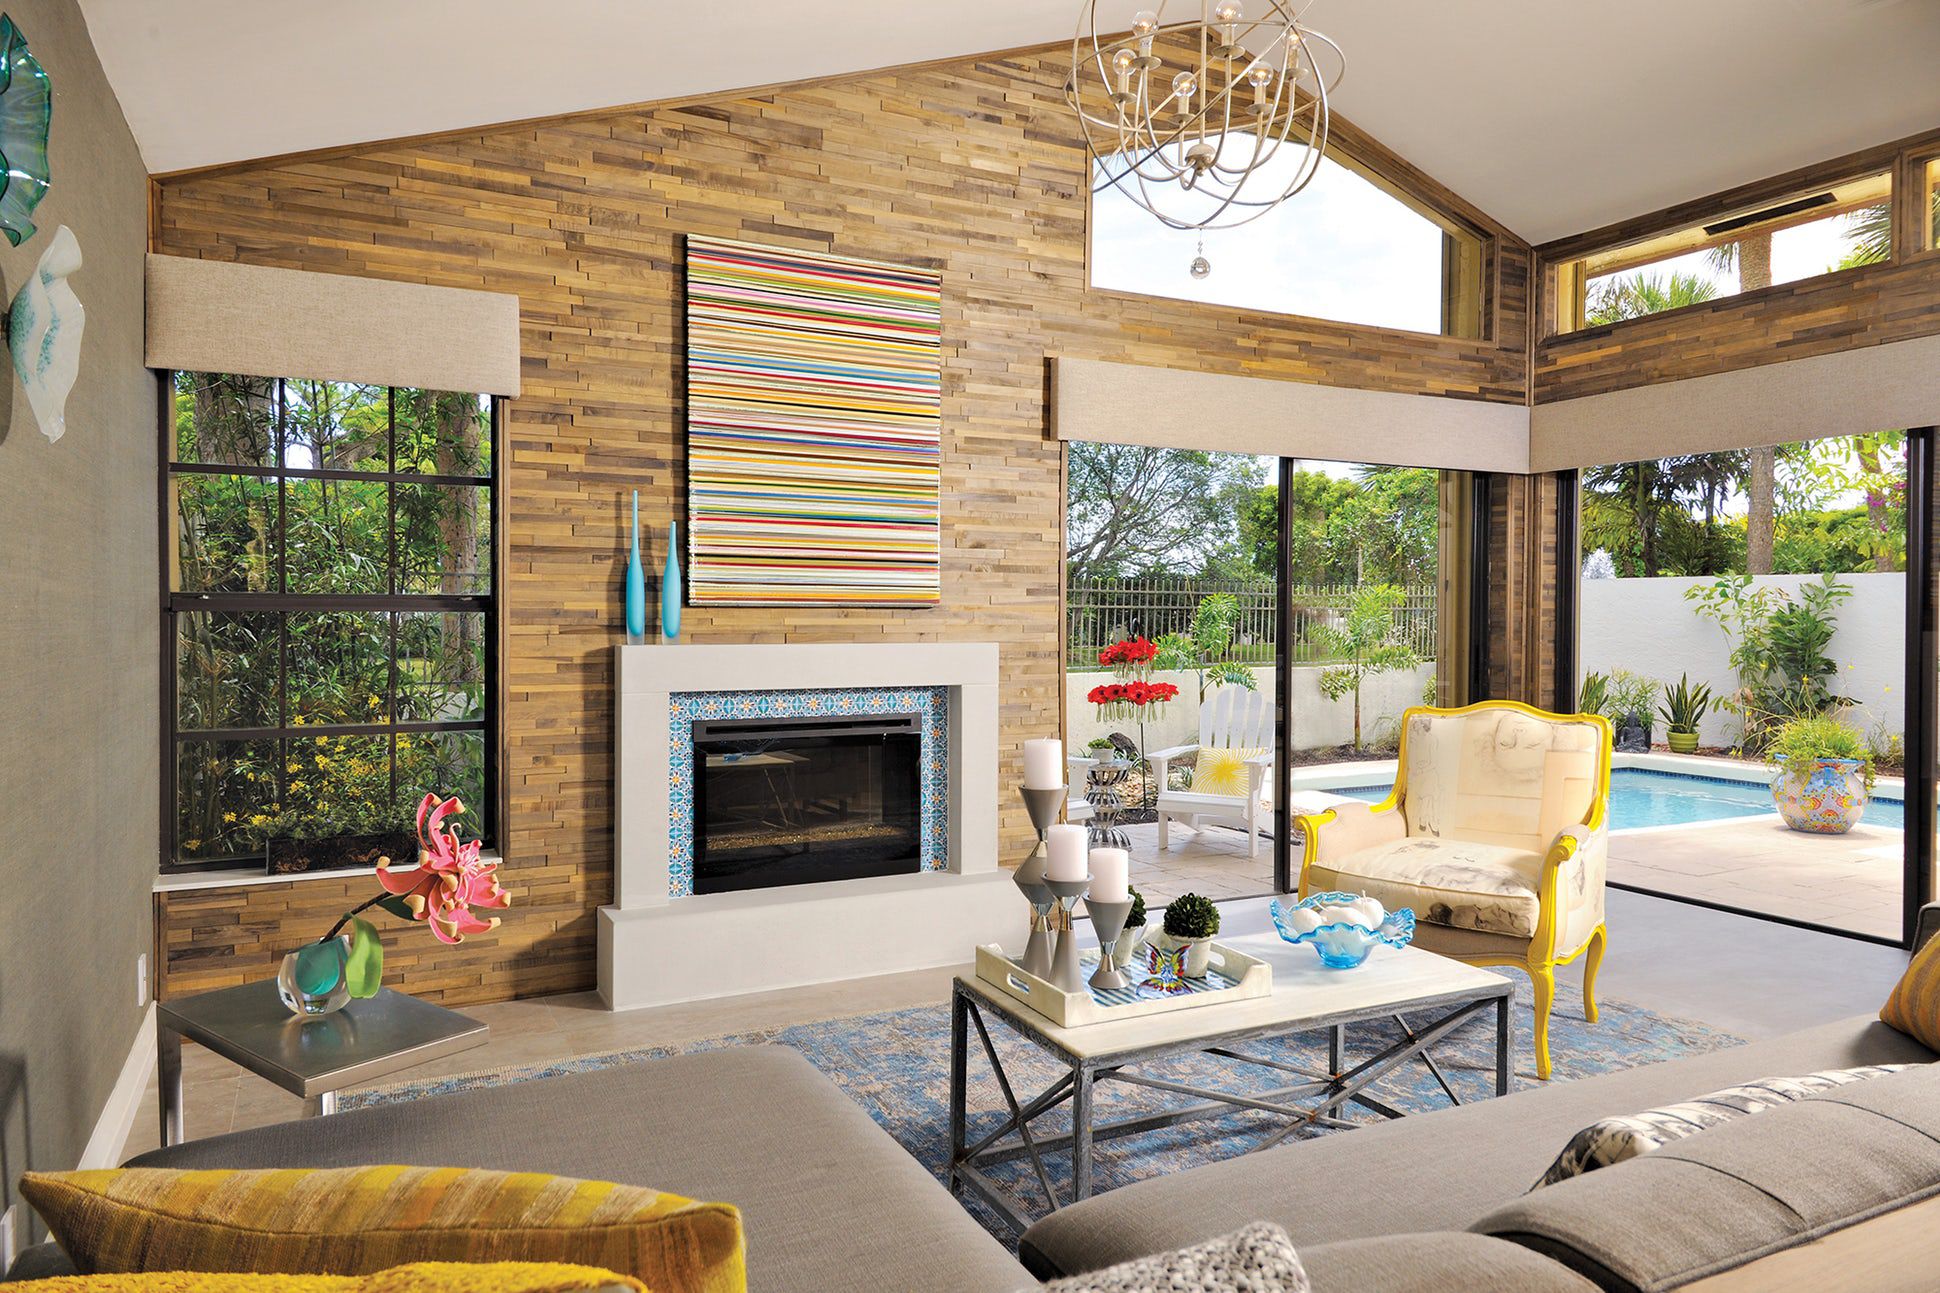 65 Best Fireplace Ideas - Beautiful Fireplace Designs & Decor